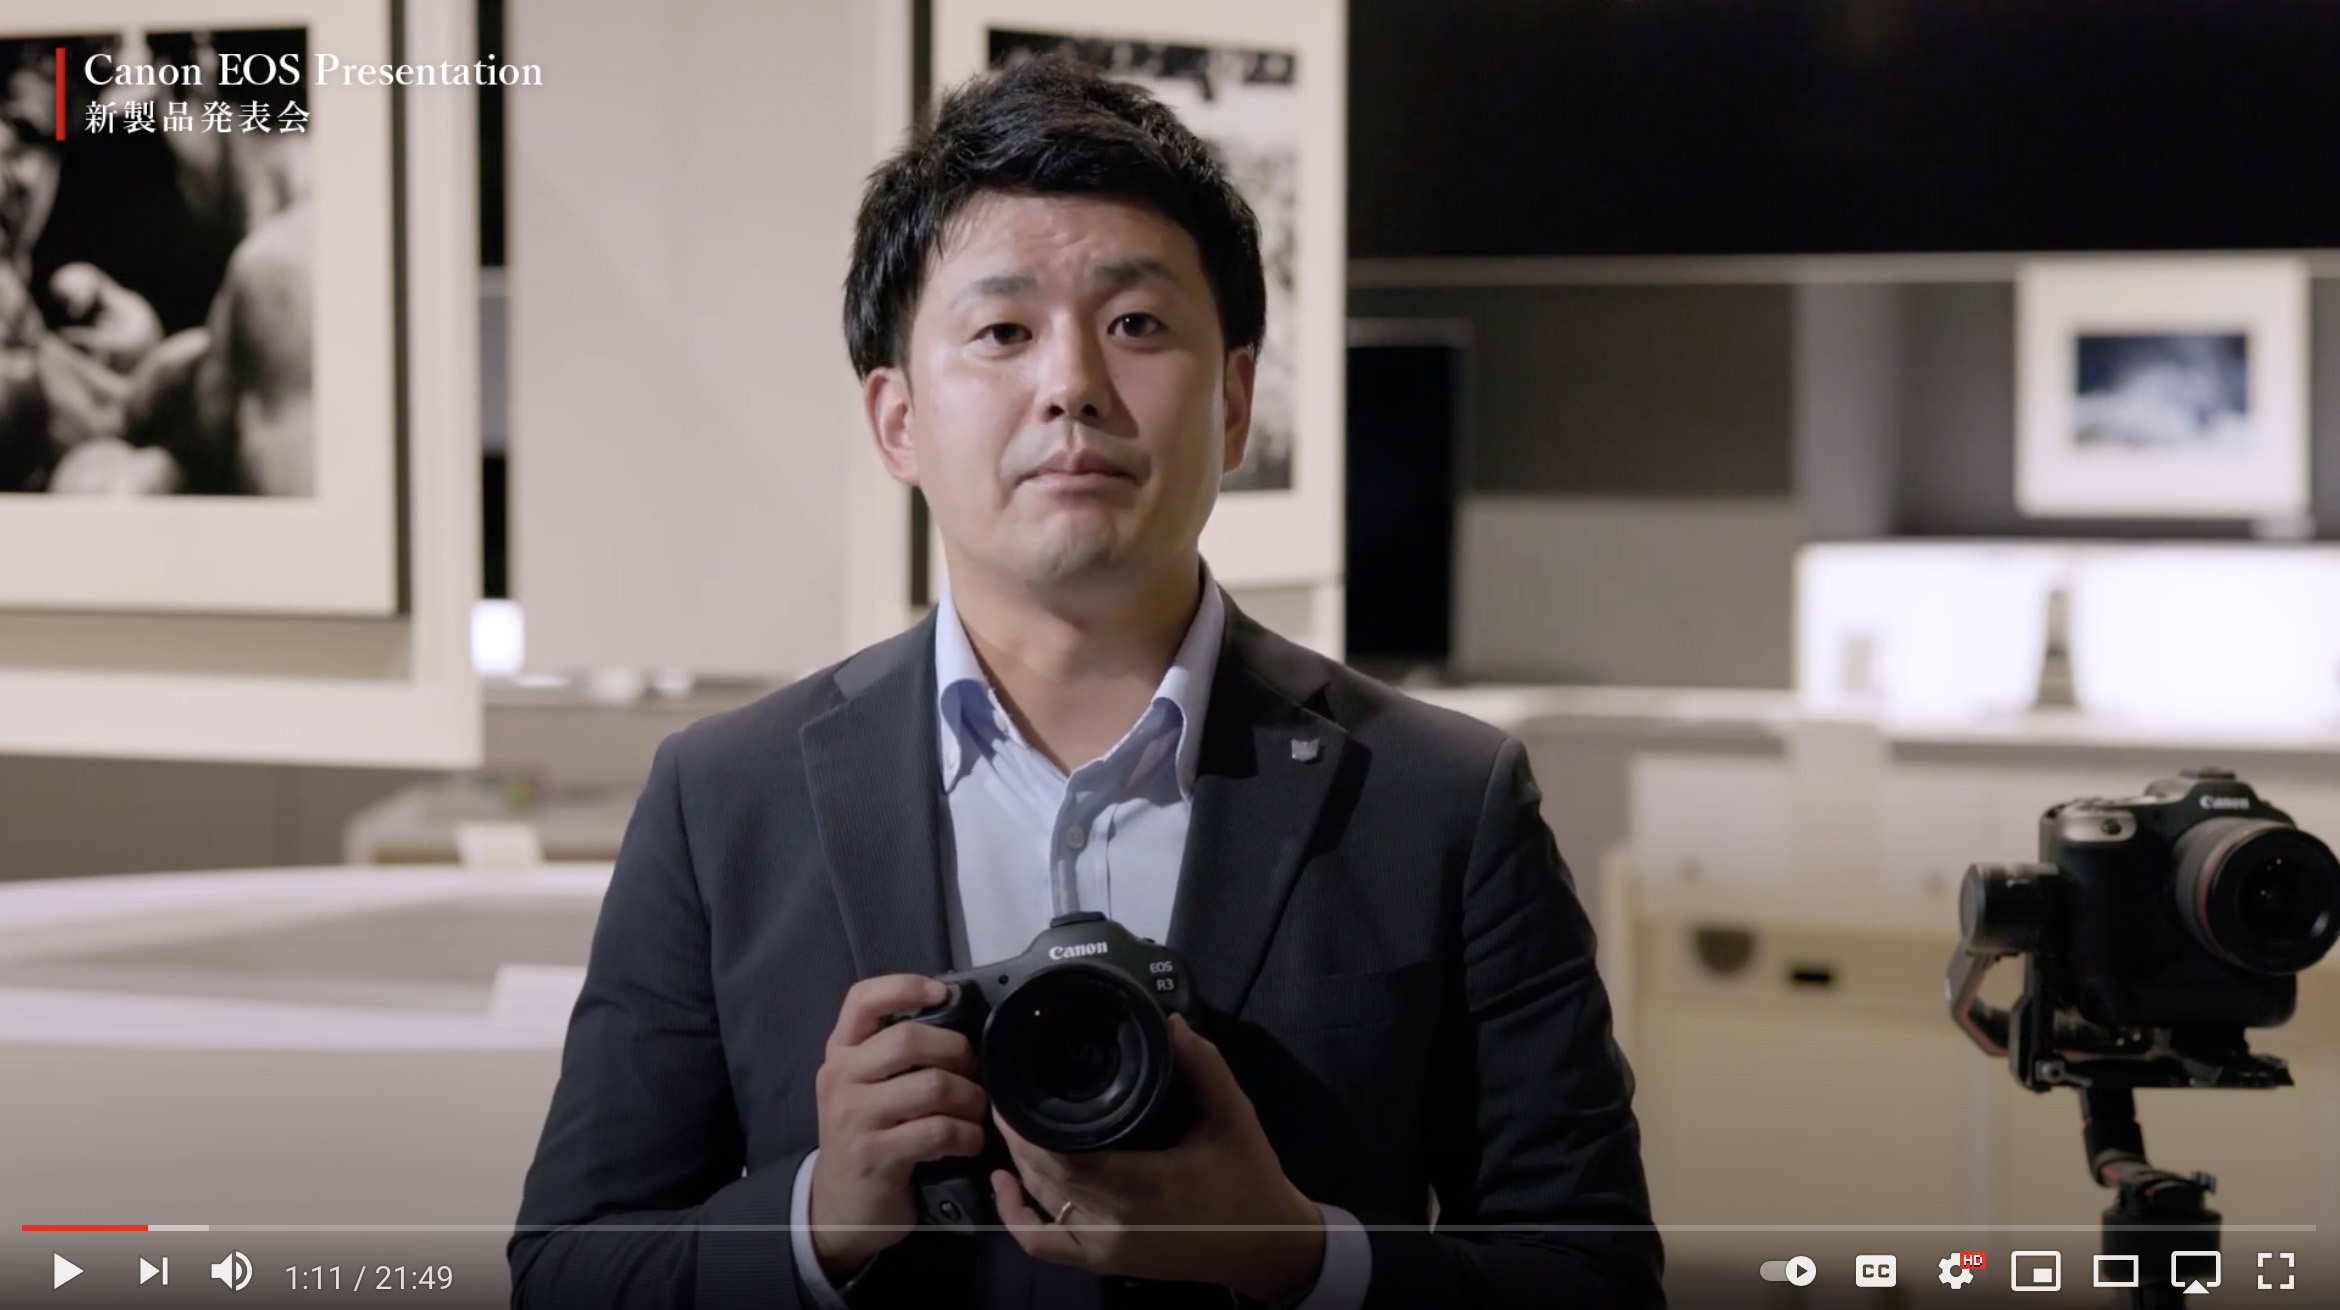 hiroyaikedaの物欲の館2 2021.09.14 「Canon EOS Presentation」について